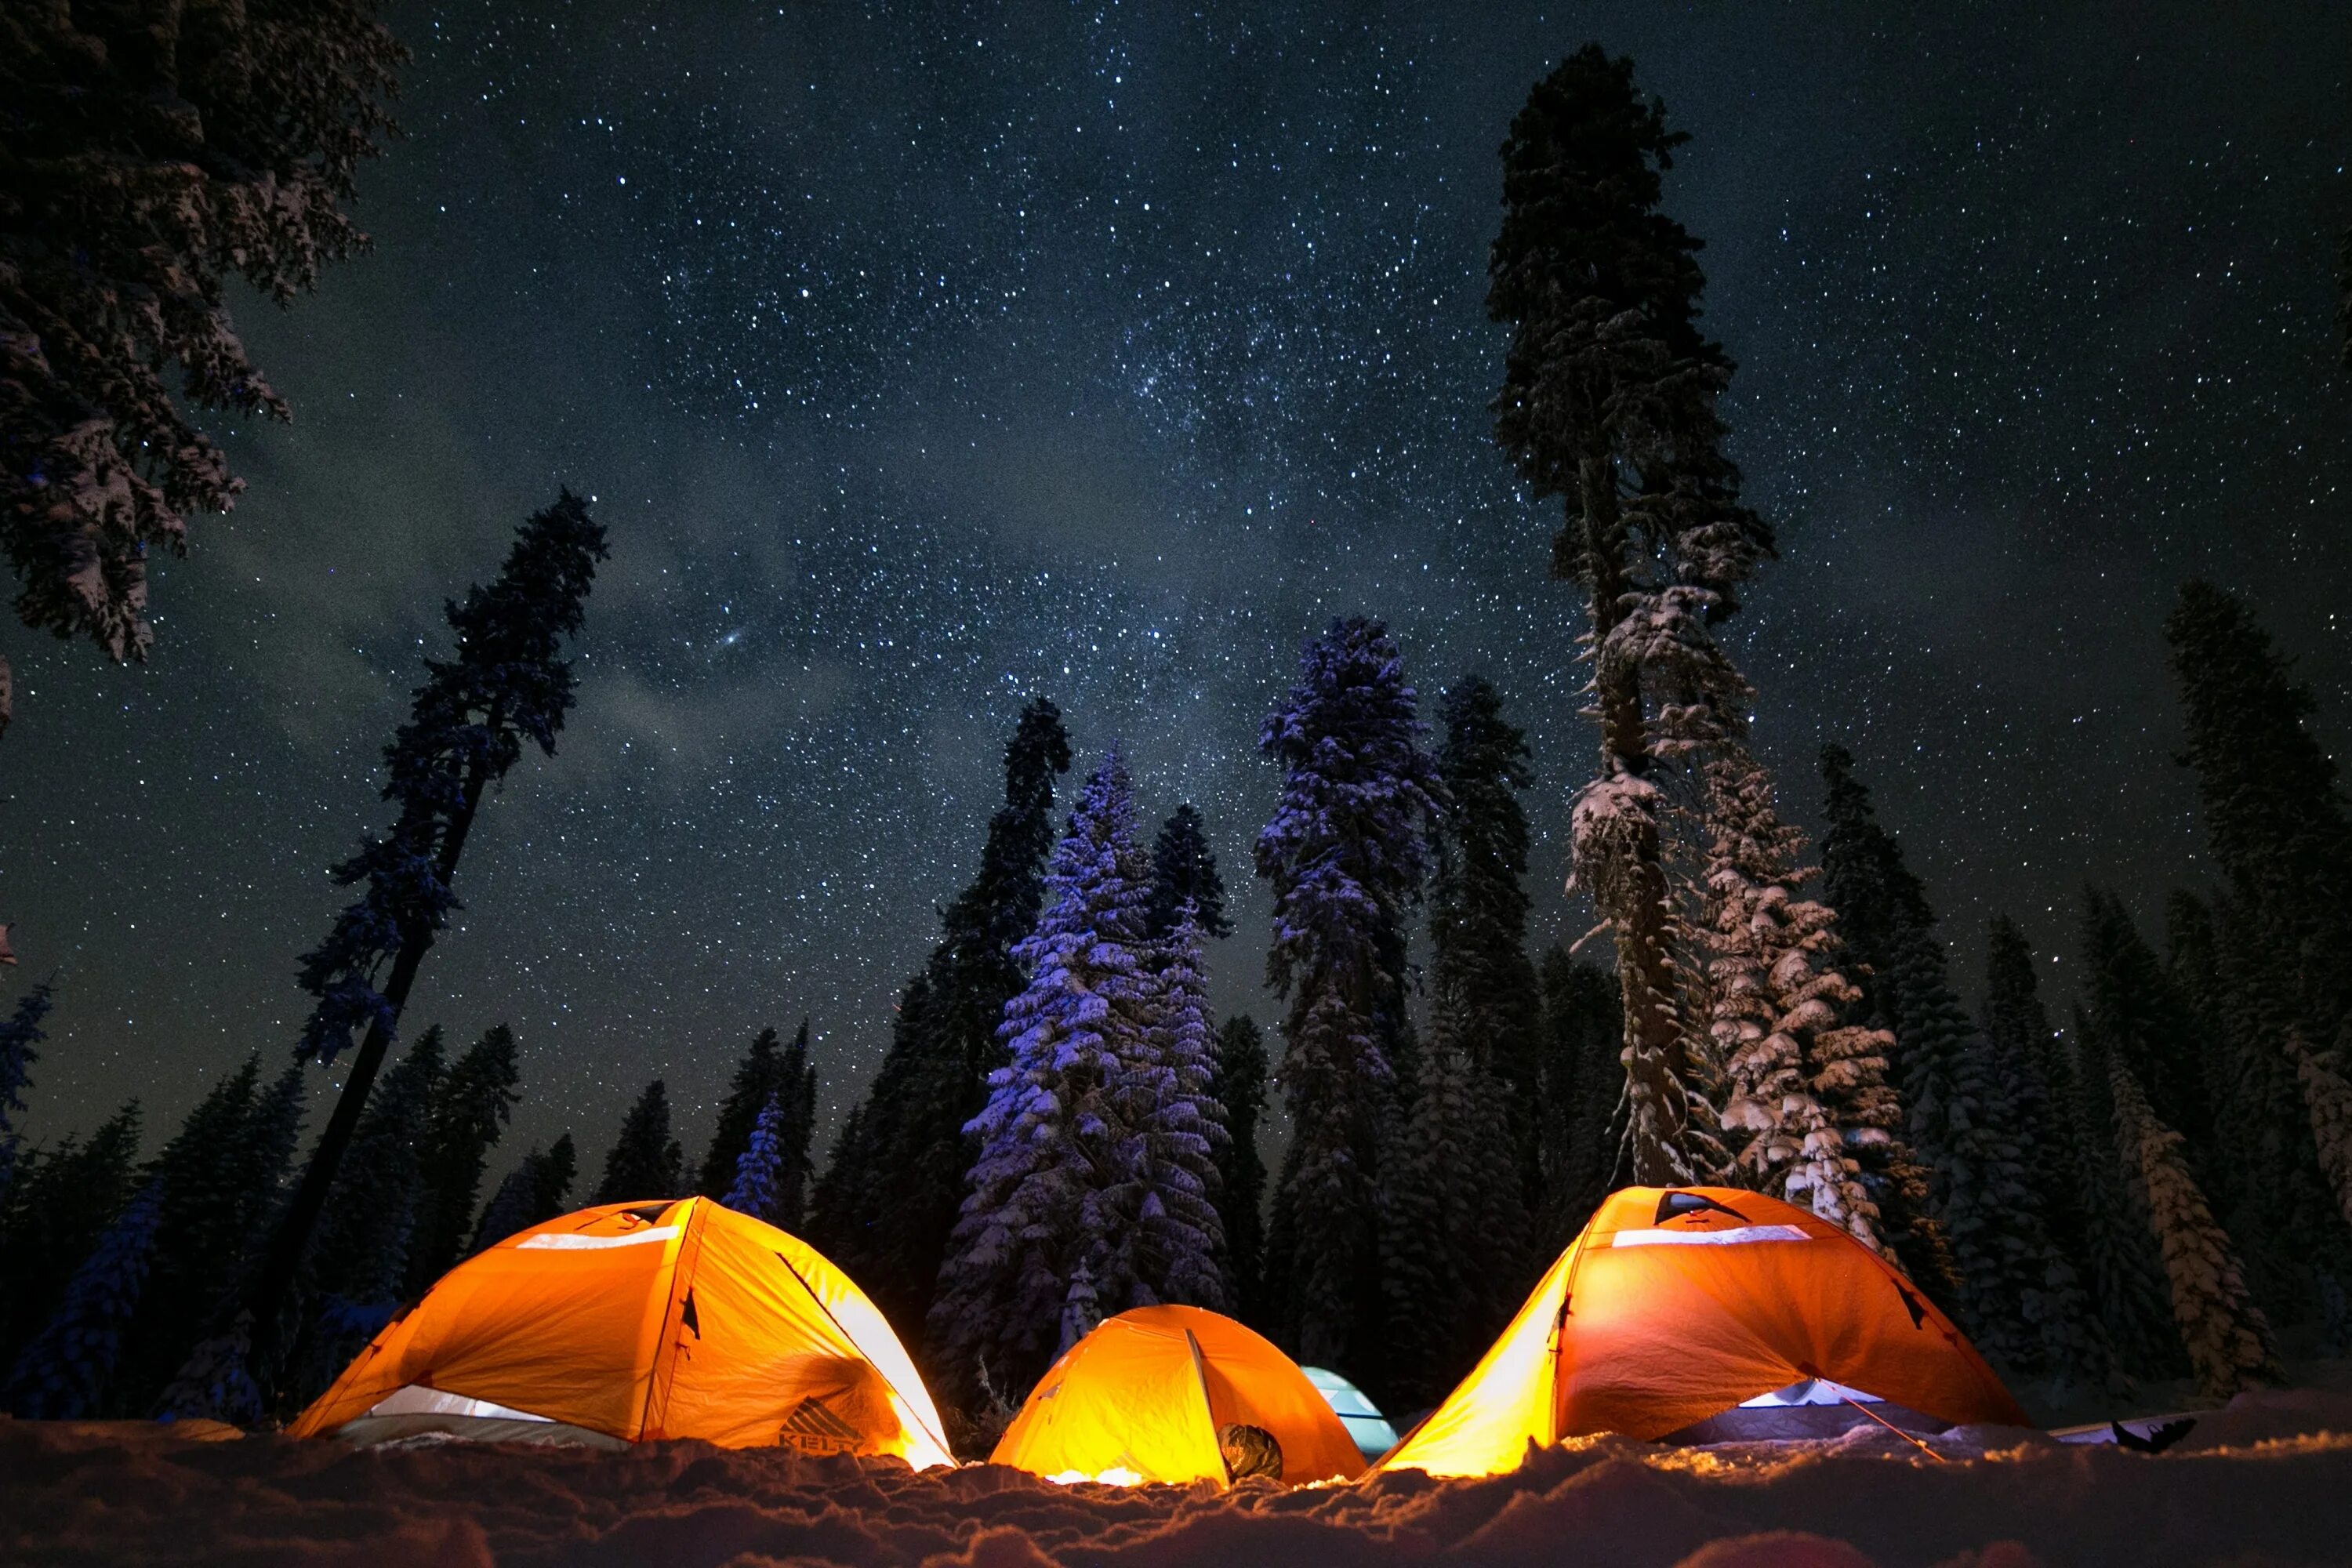 Camping pictures. Палатка в лесу. Пейзаж с палаткой. Палатка ночью. Пейзаж горы с палаткой.